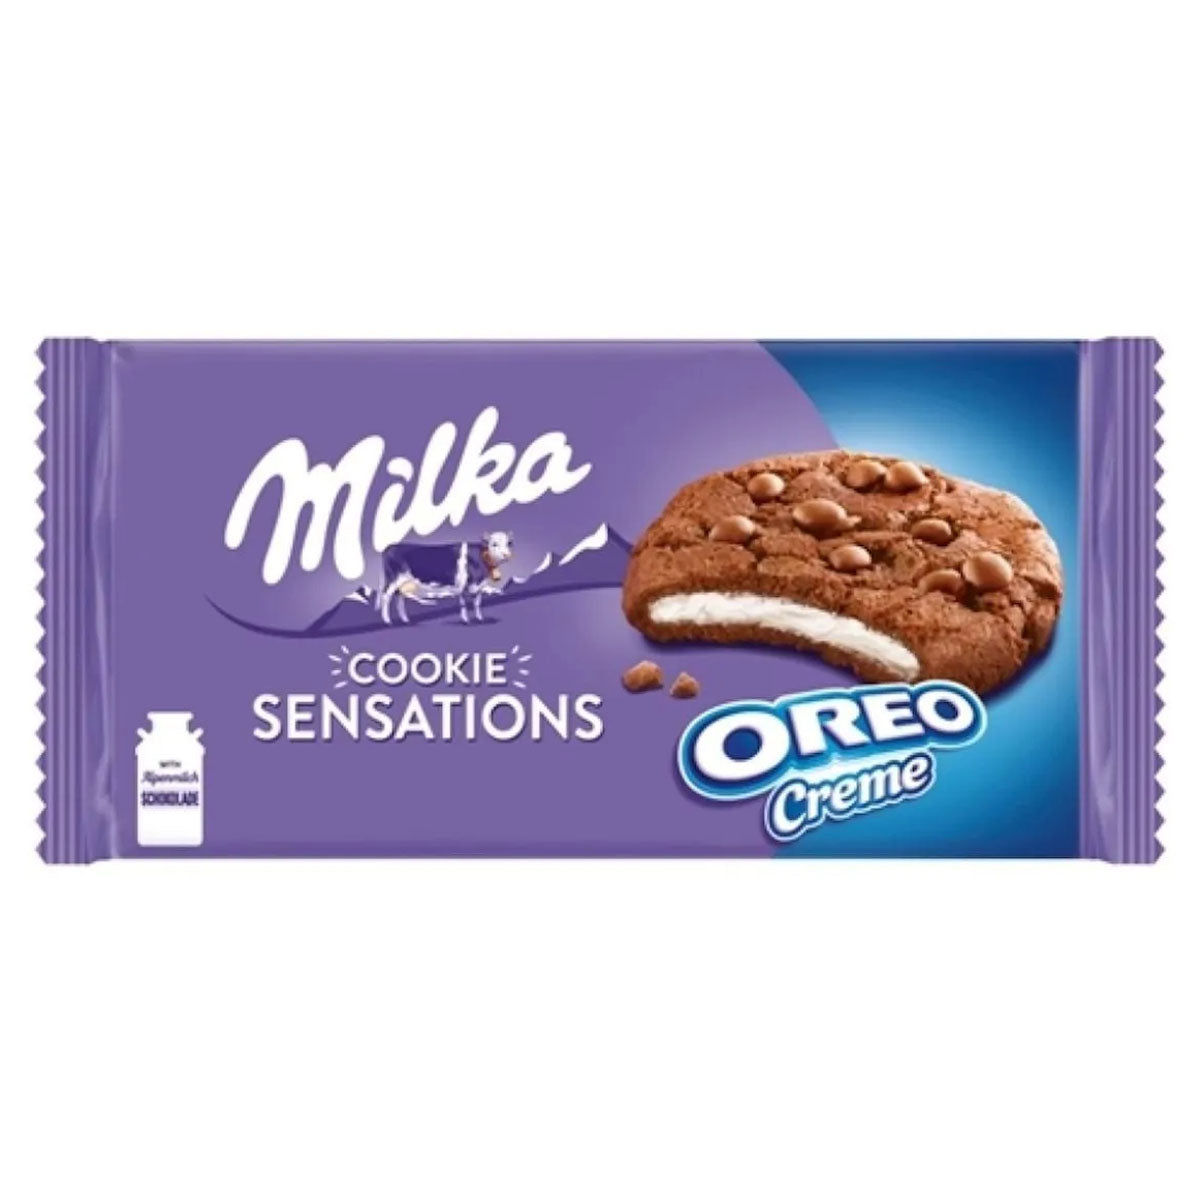 Milka - Cookie Sensations Oreo - 156g - Continental Food Store